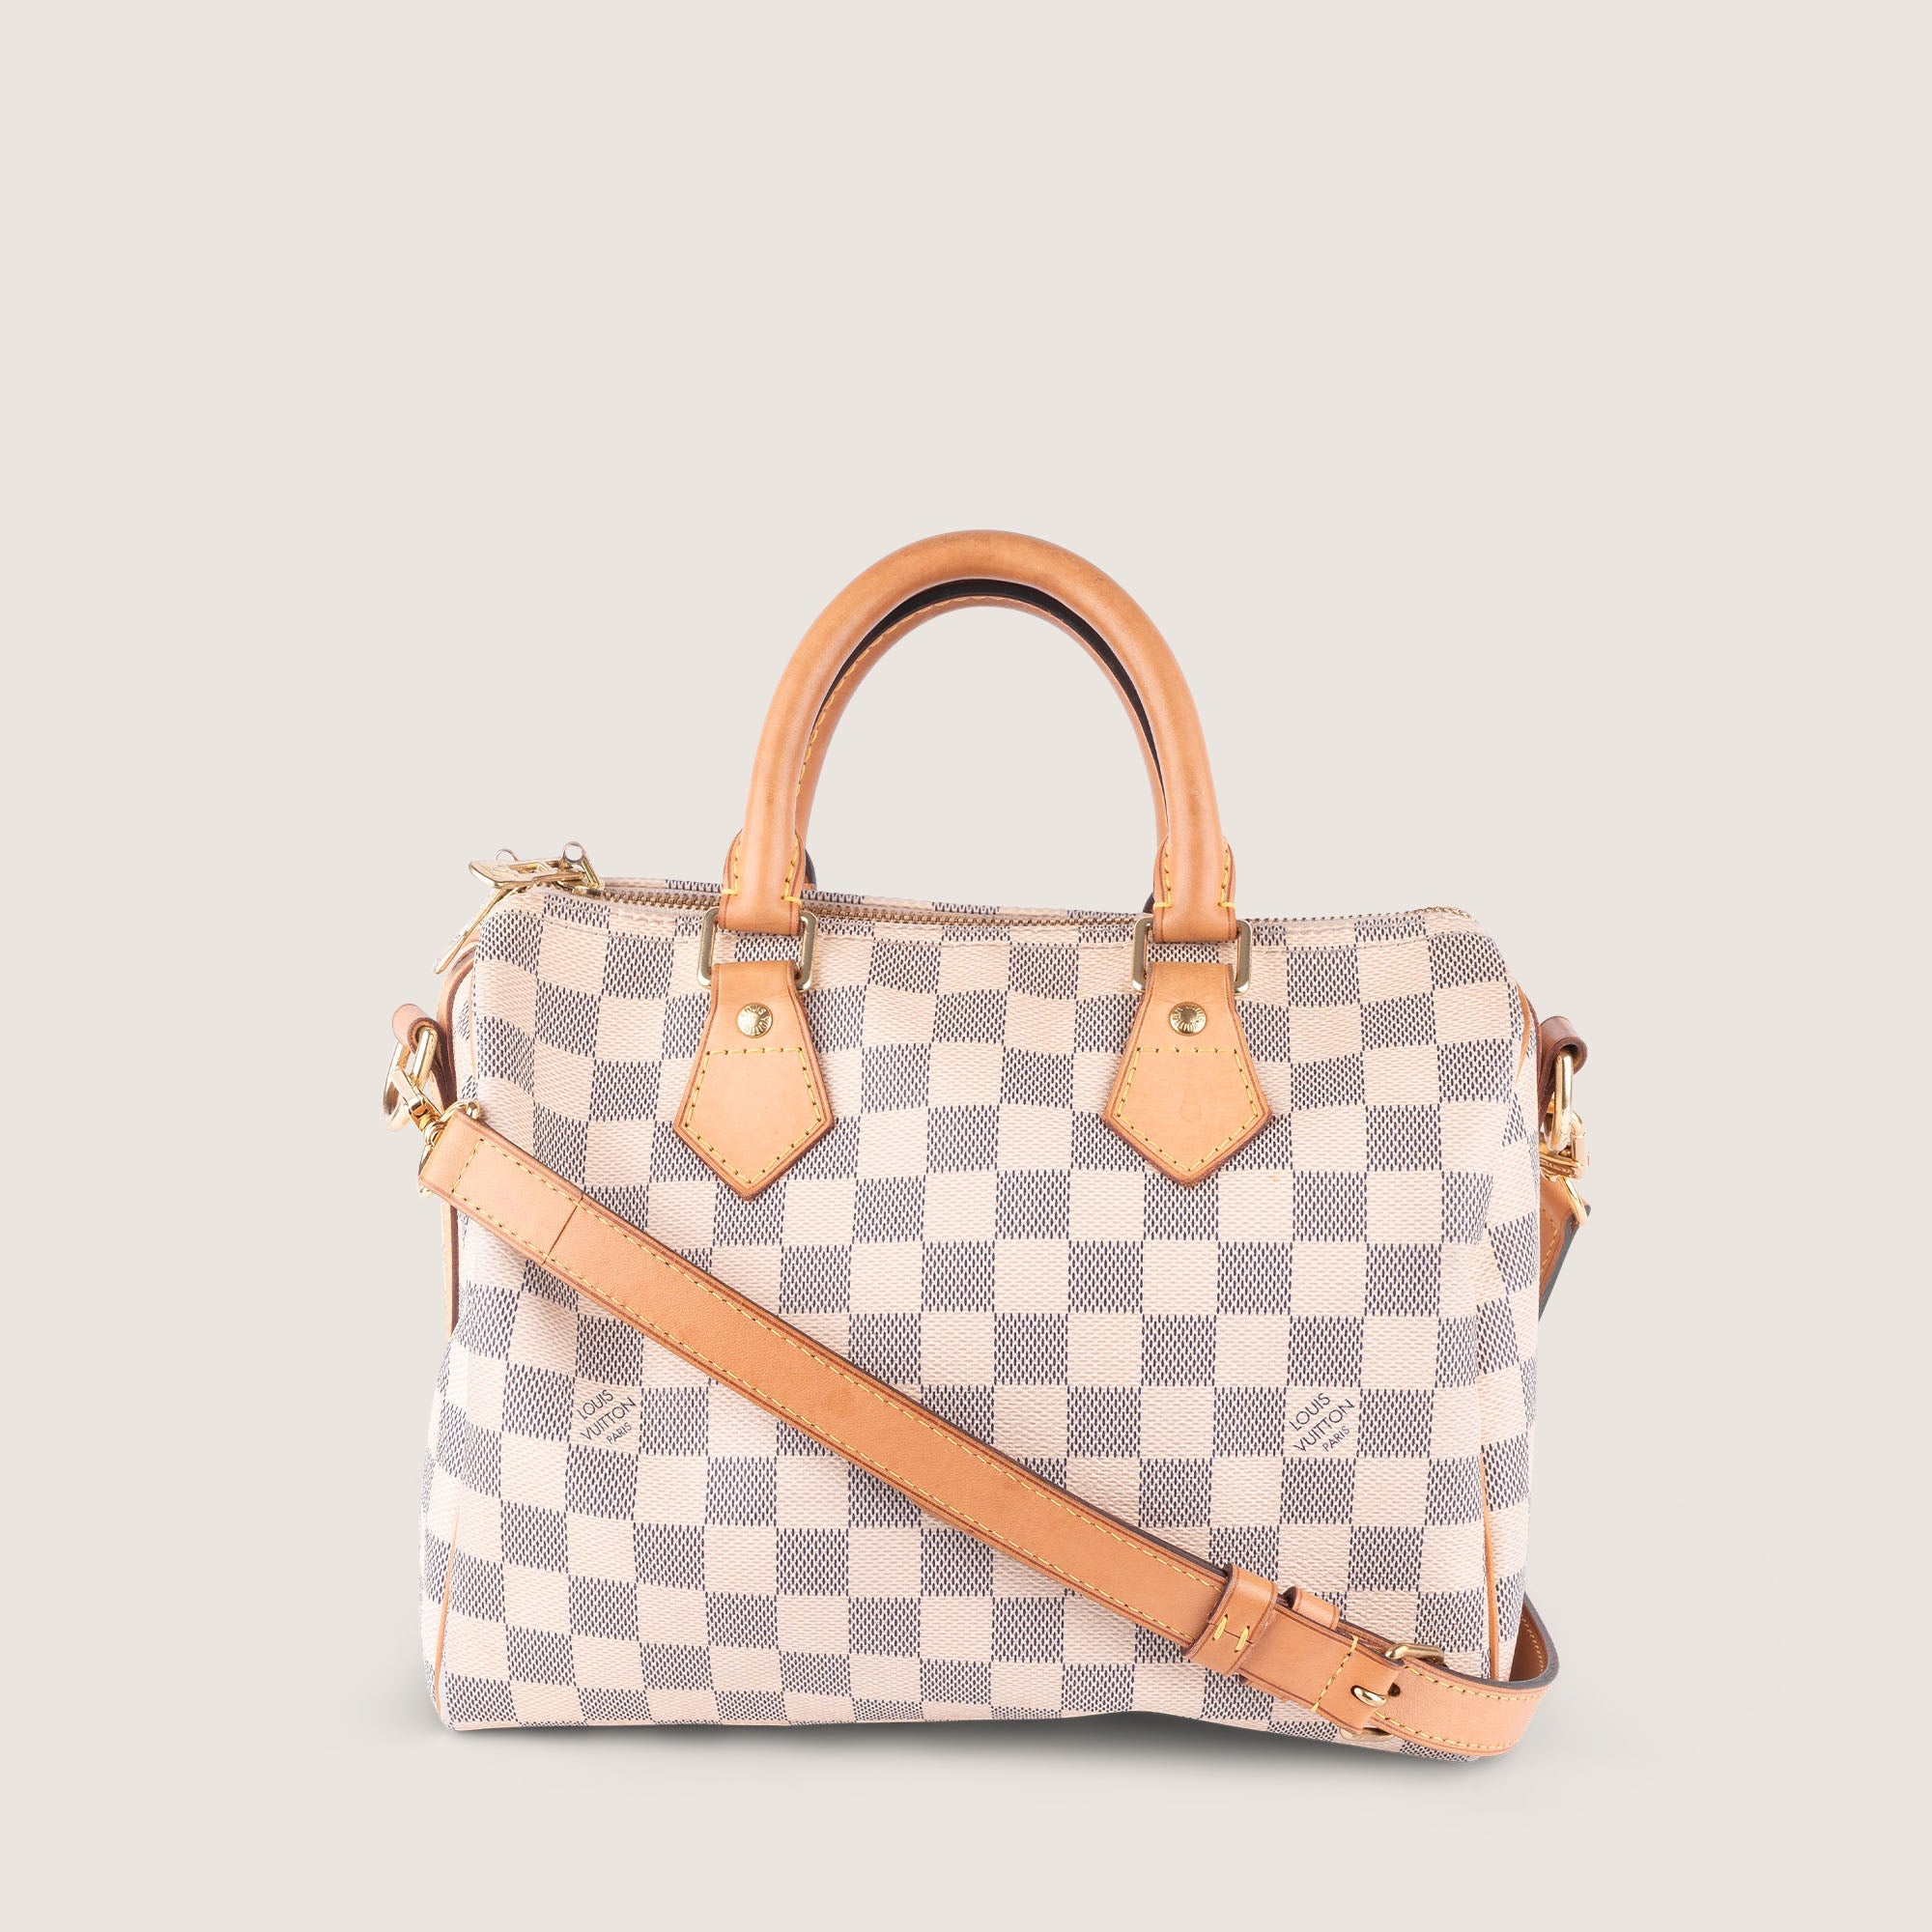 Speedy 25 Bandoulière Handbag - LOUIS VUITTON - Affordable Luxury image